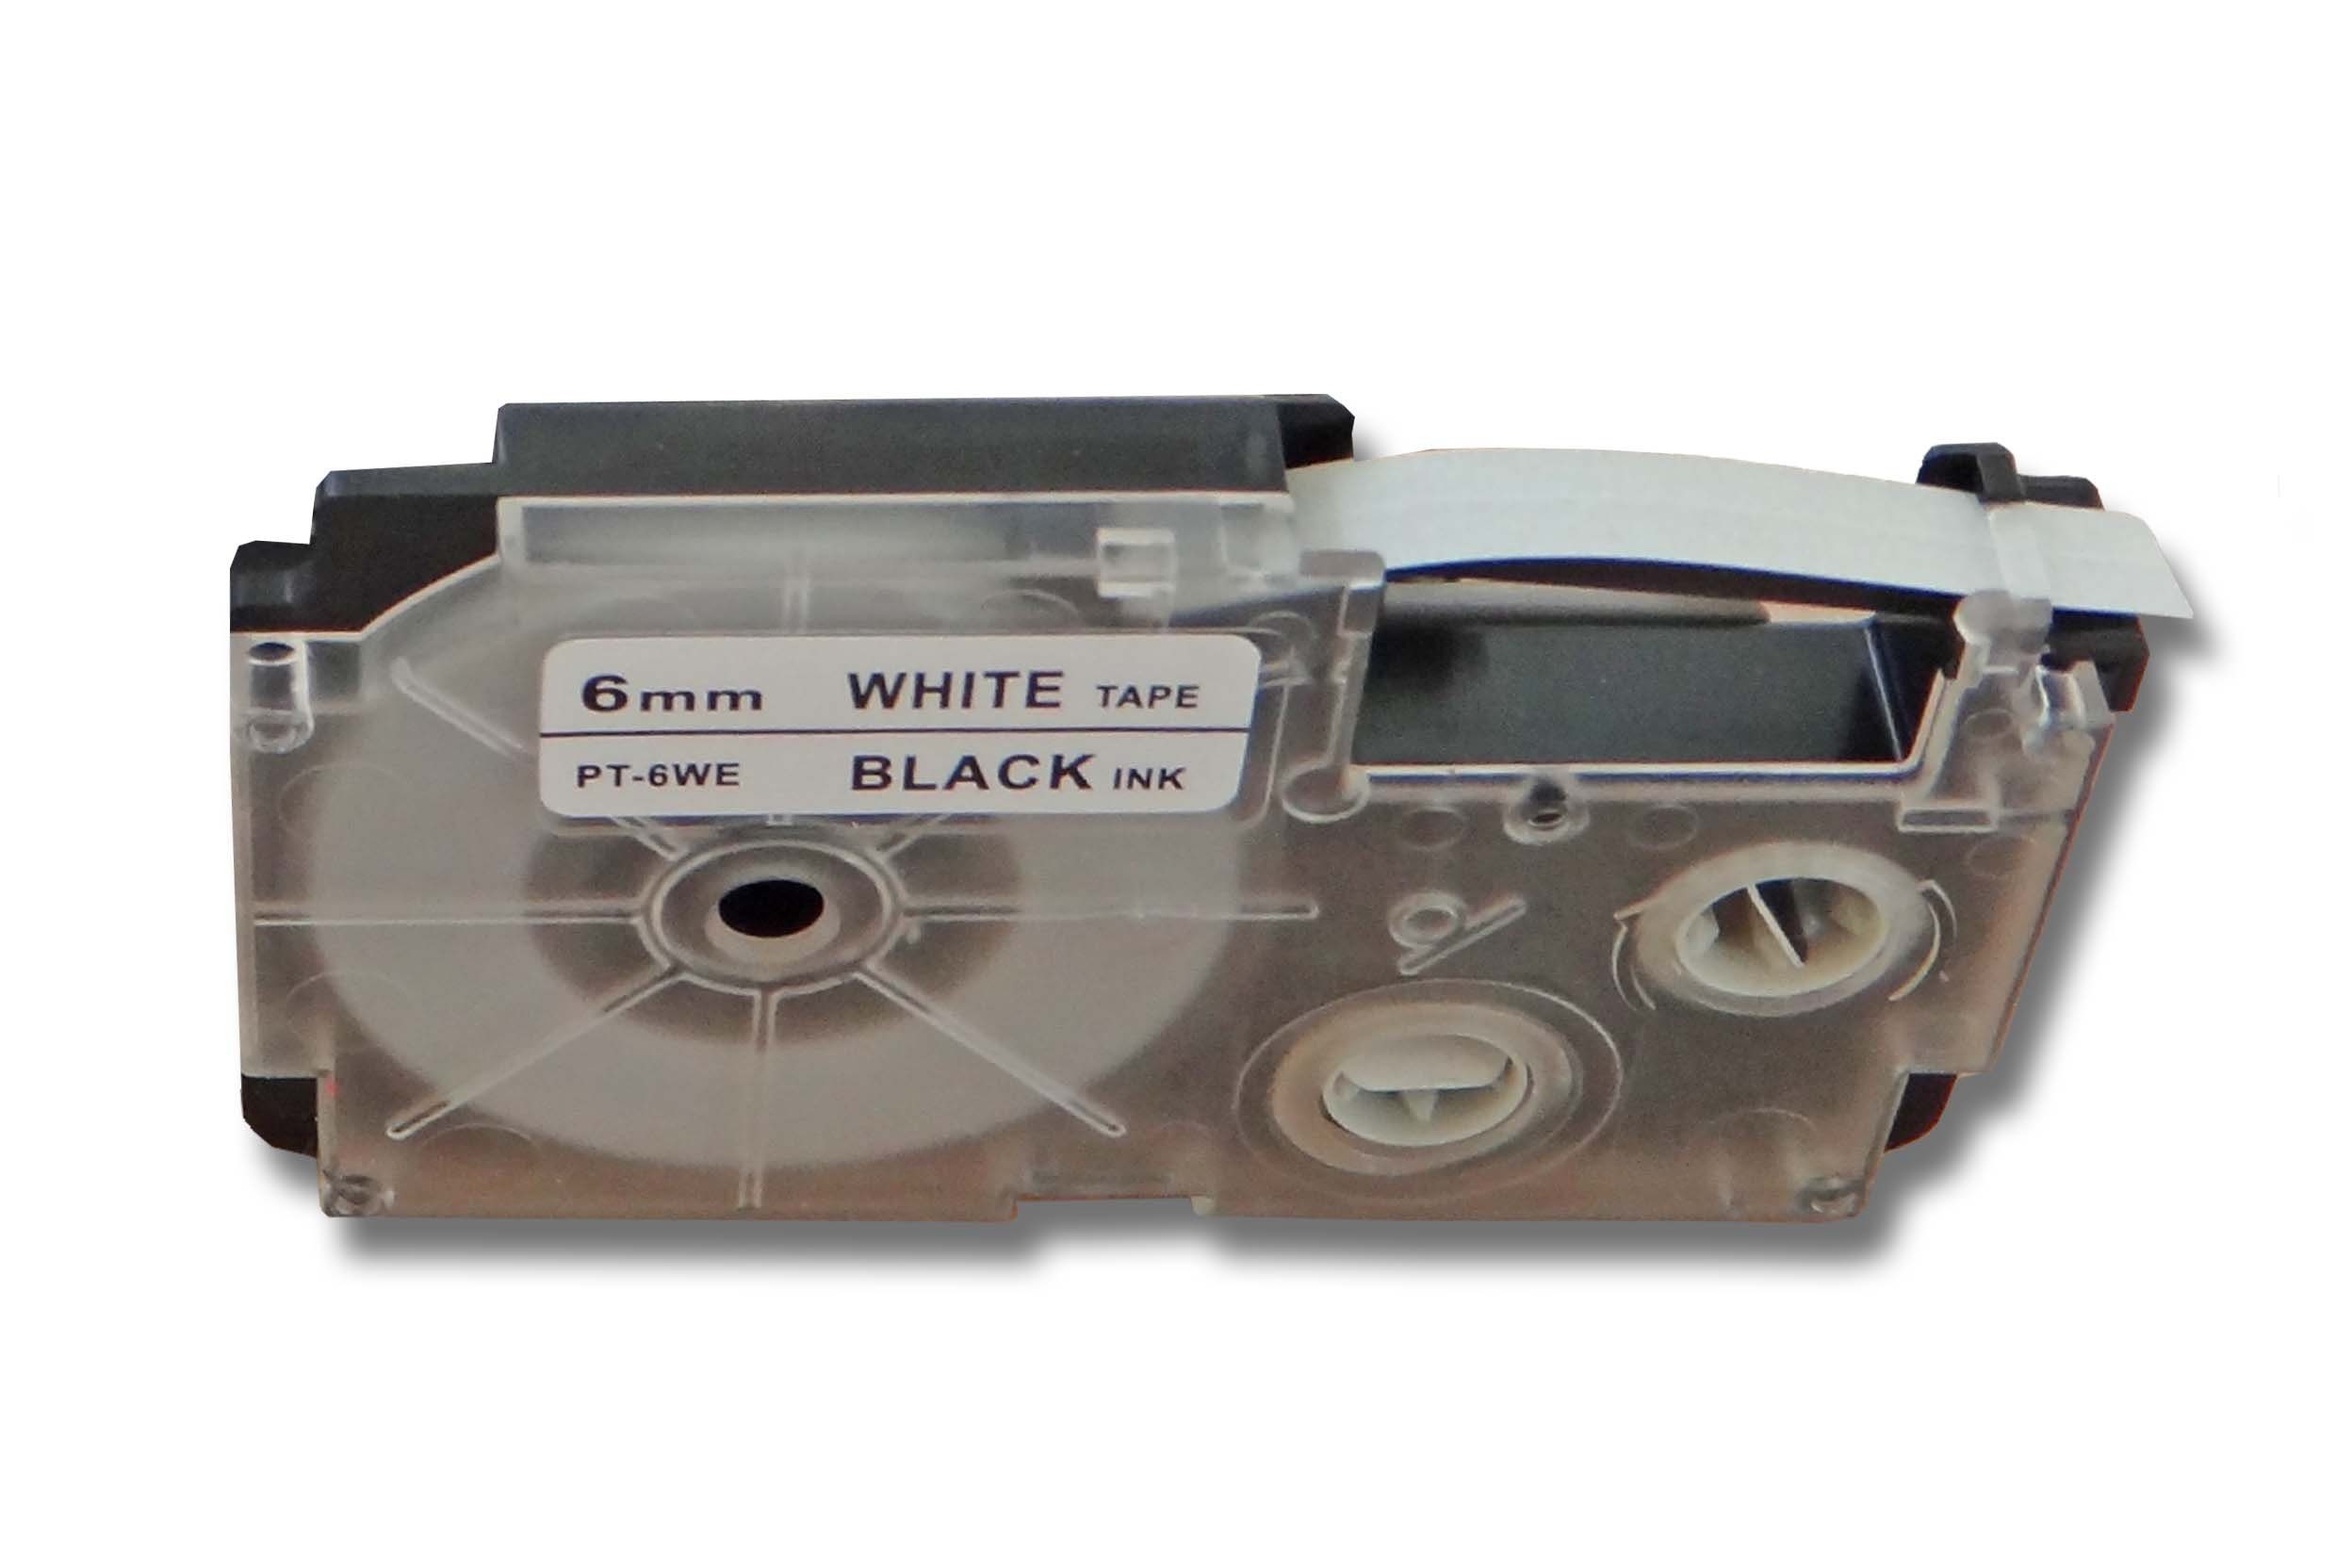 vhbw Beschriftungsband passend für Casio KL-750E, KL-C500, KL-8200, KL-8100, KL-820, KL-780